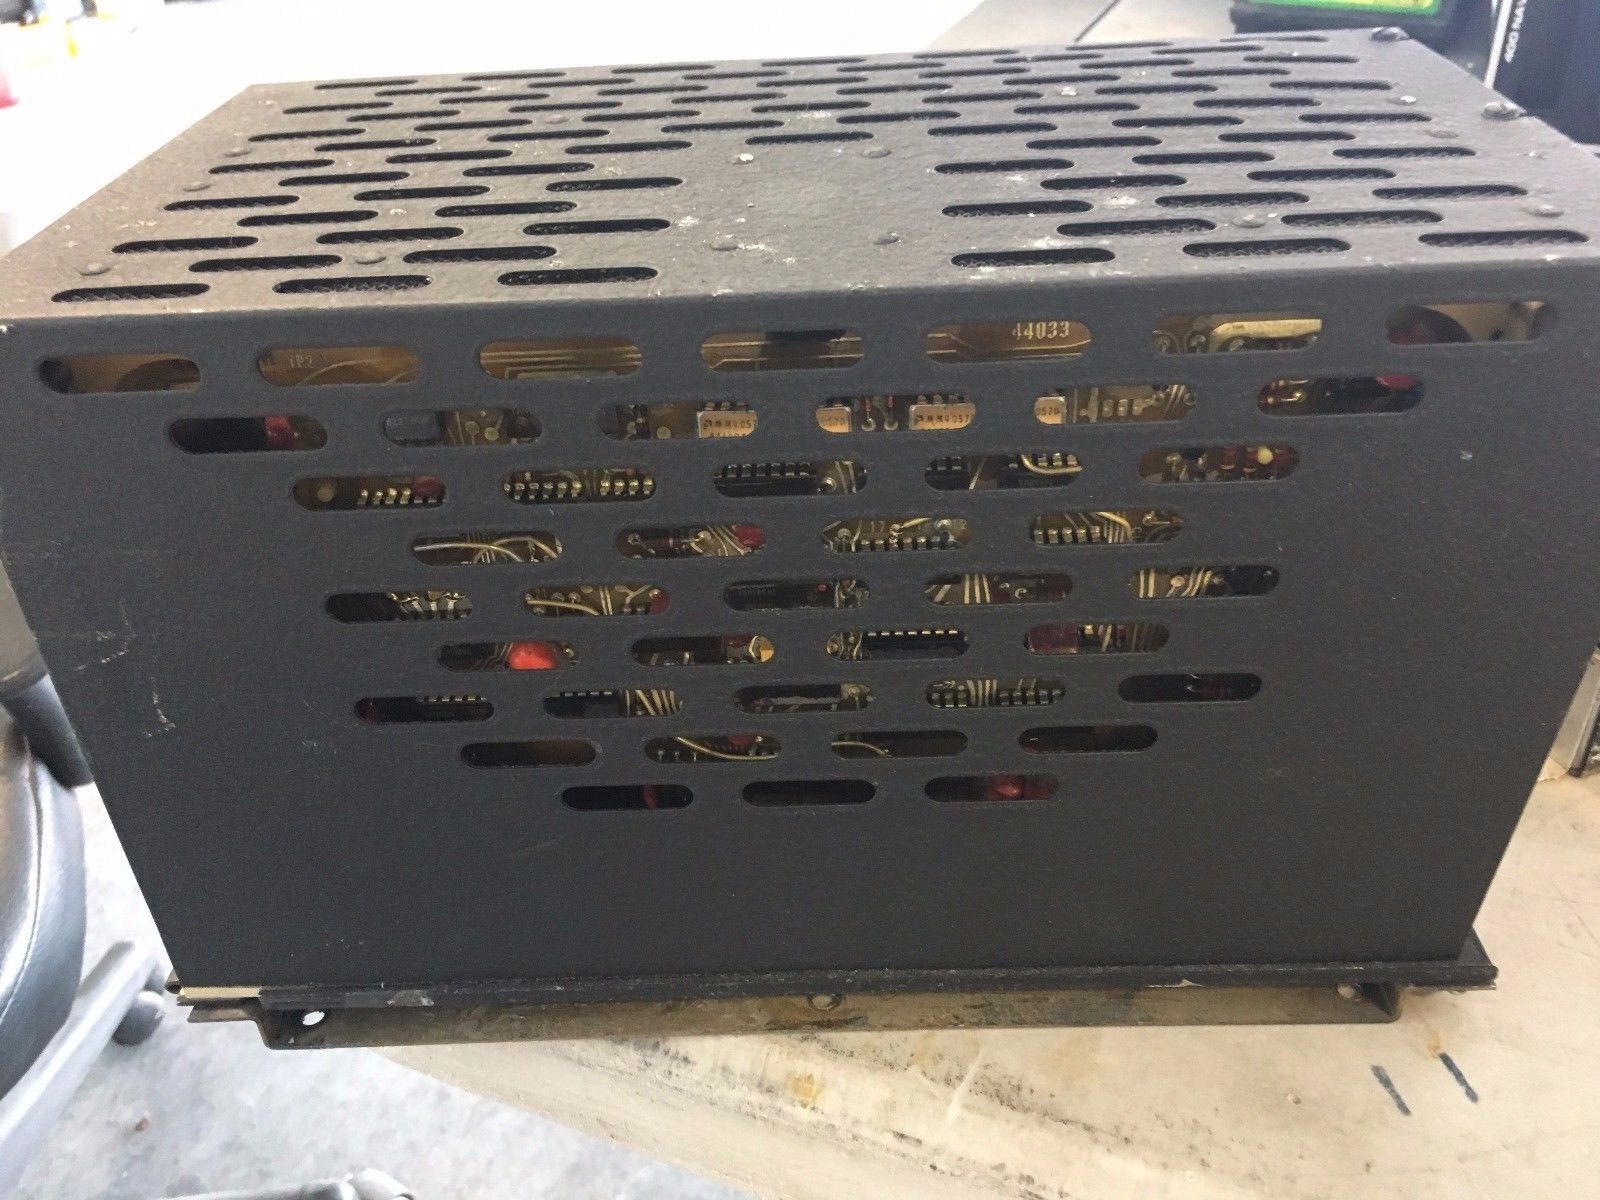 CA-550 Computer Amplifier